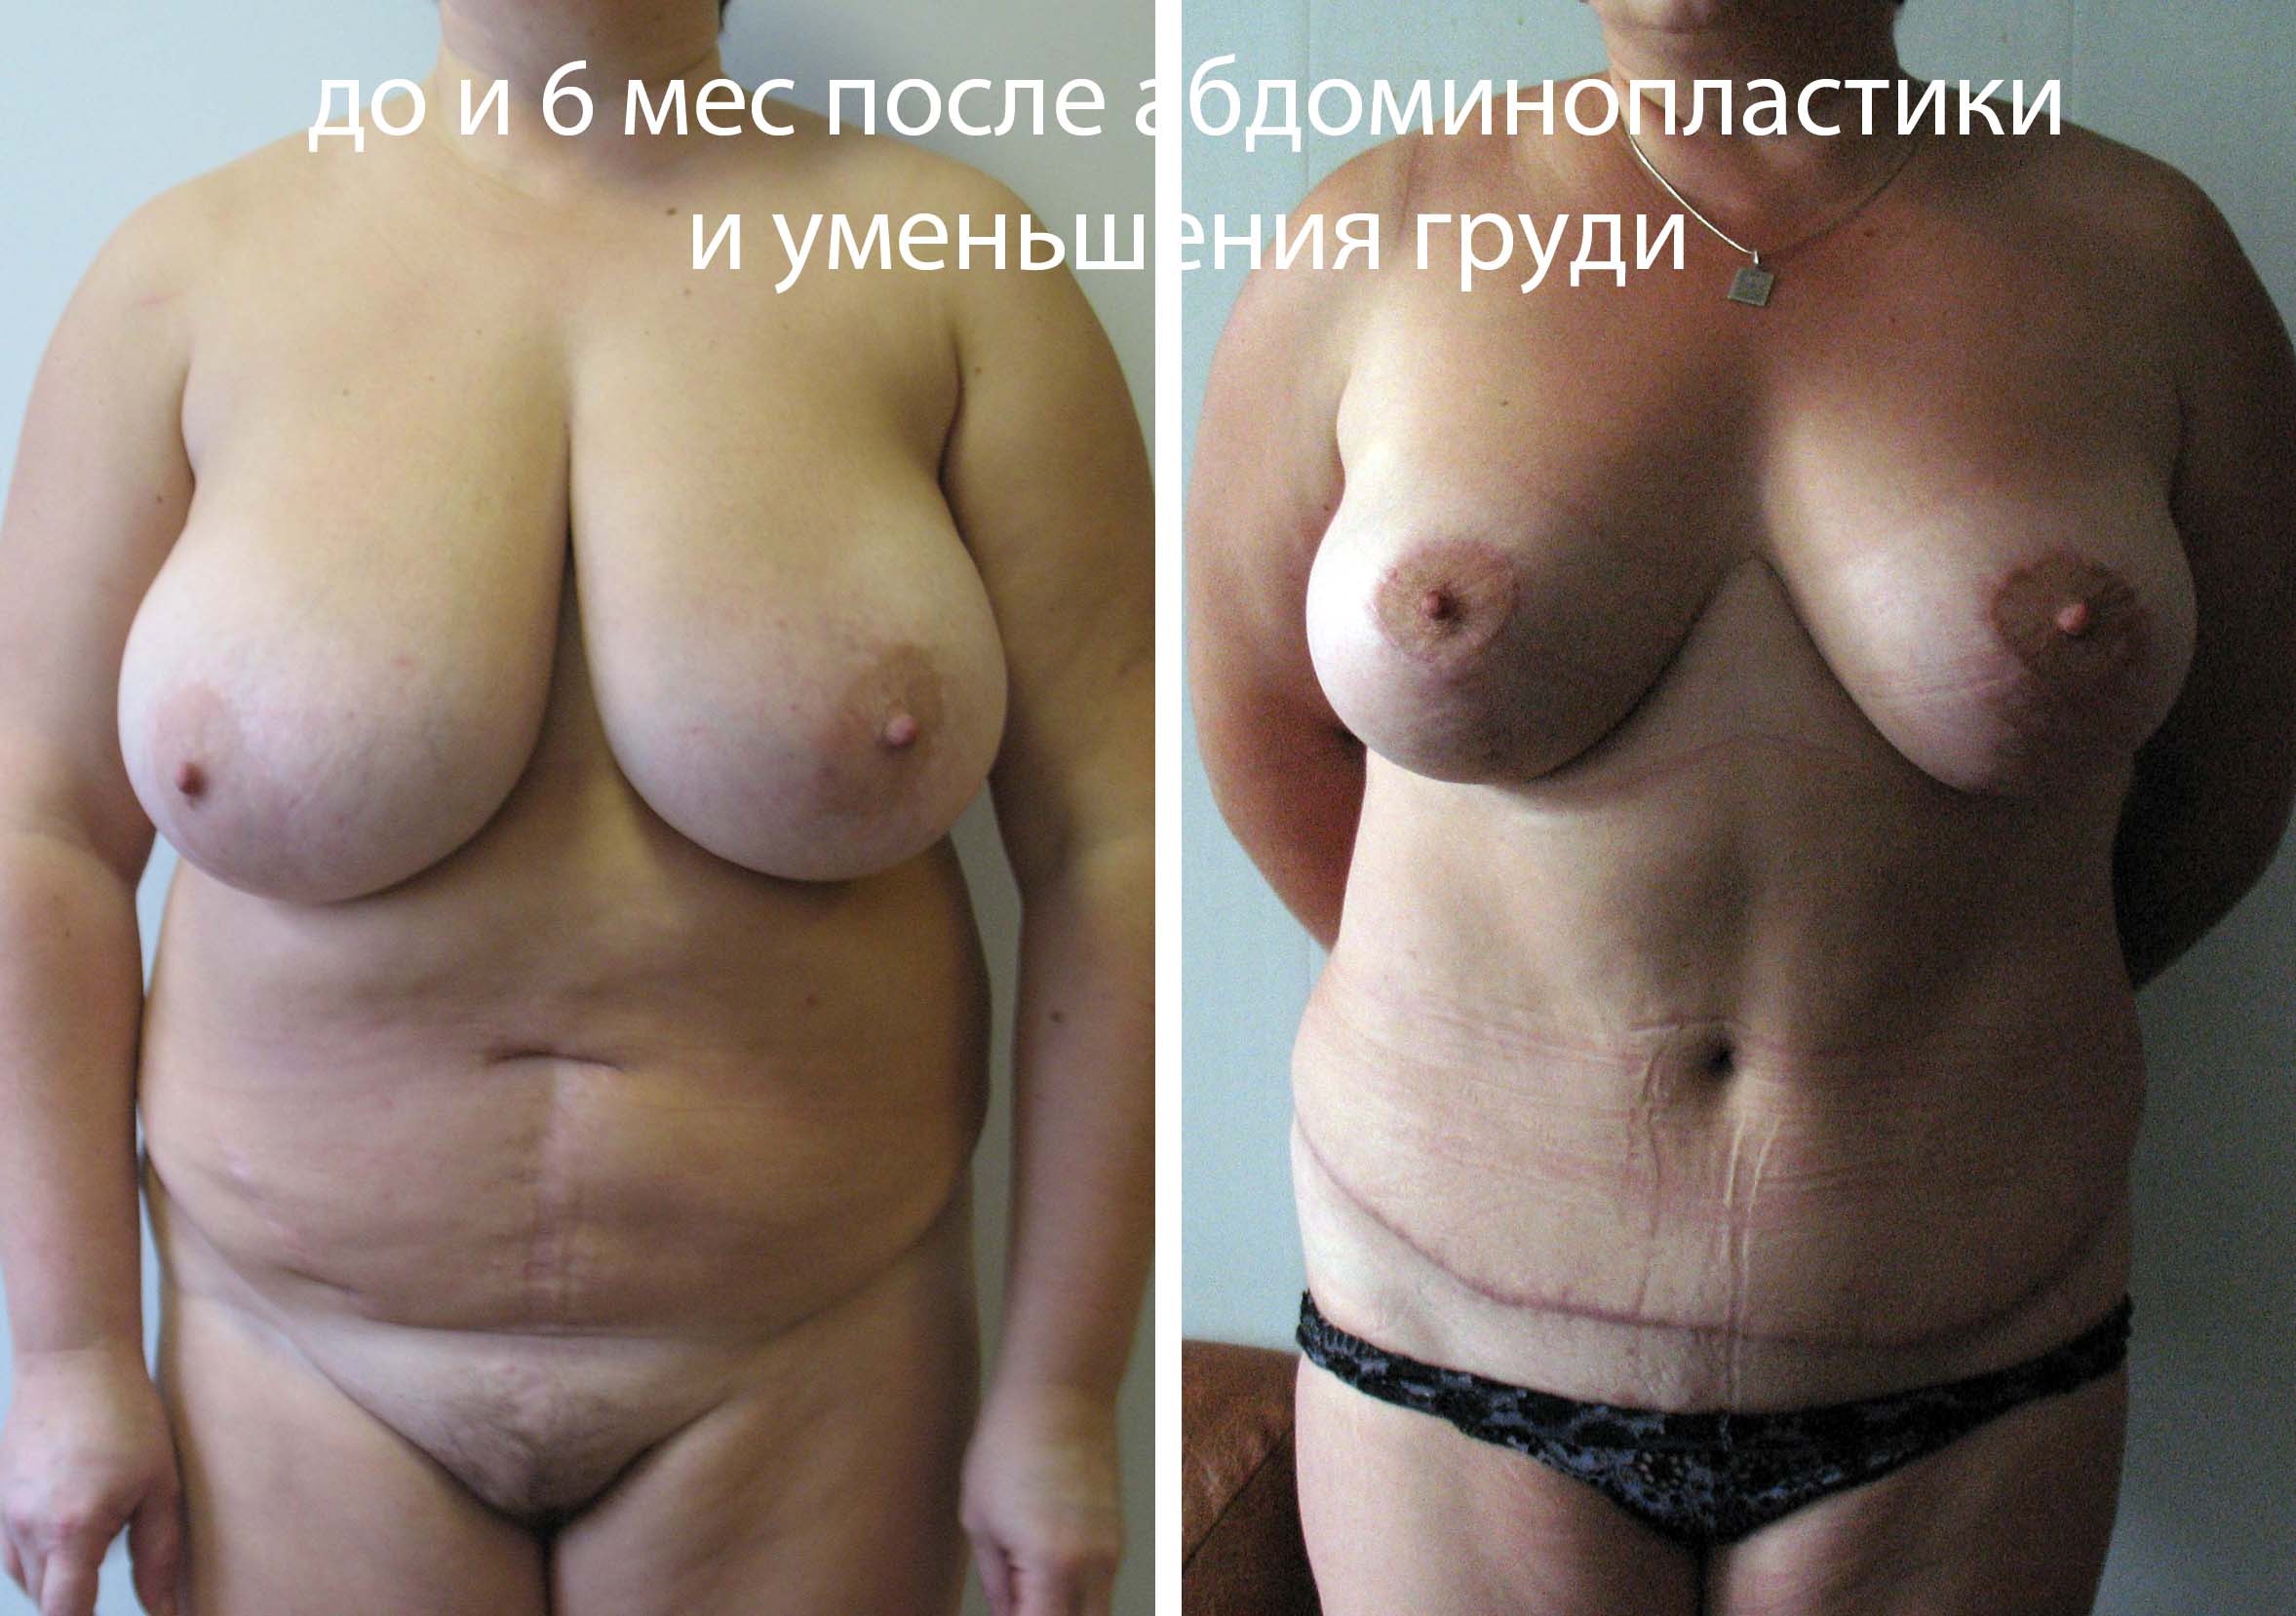 операция на груди у женщин фото 116